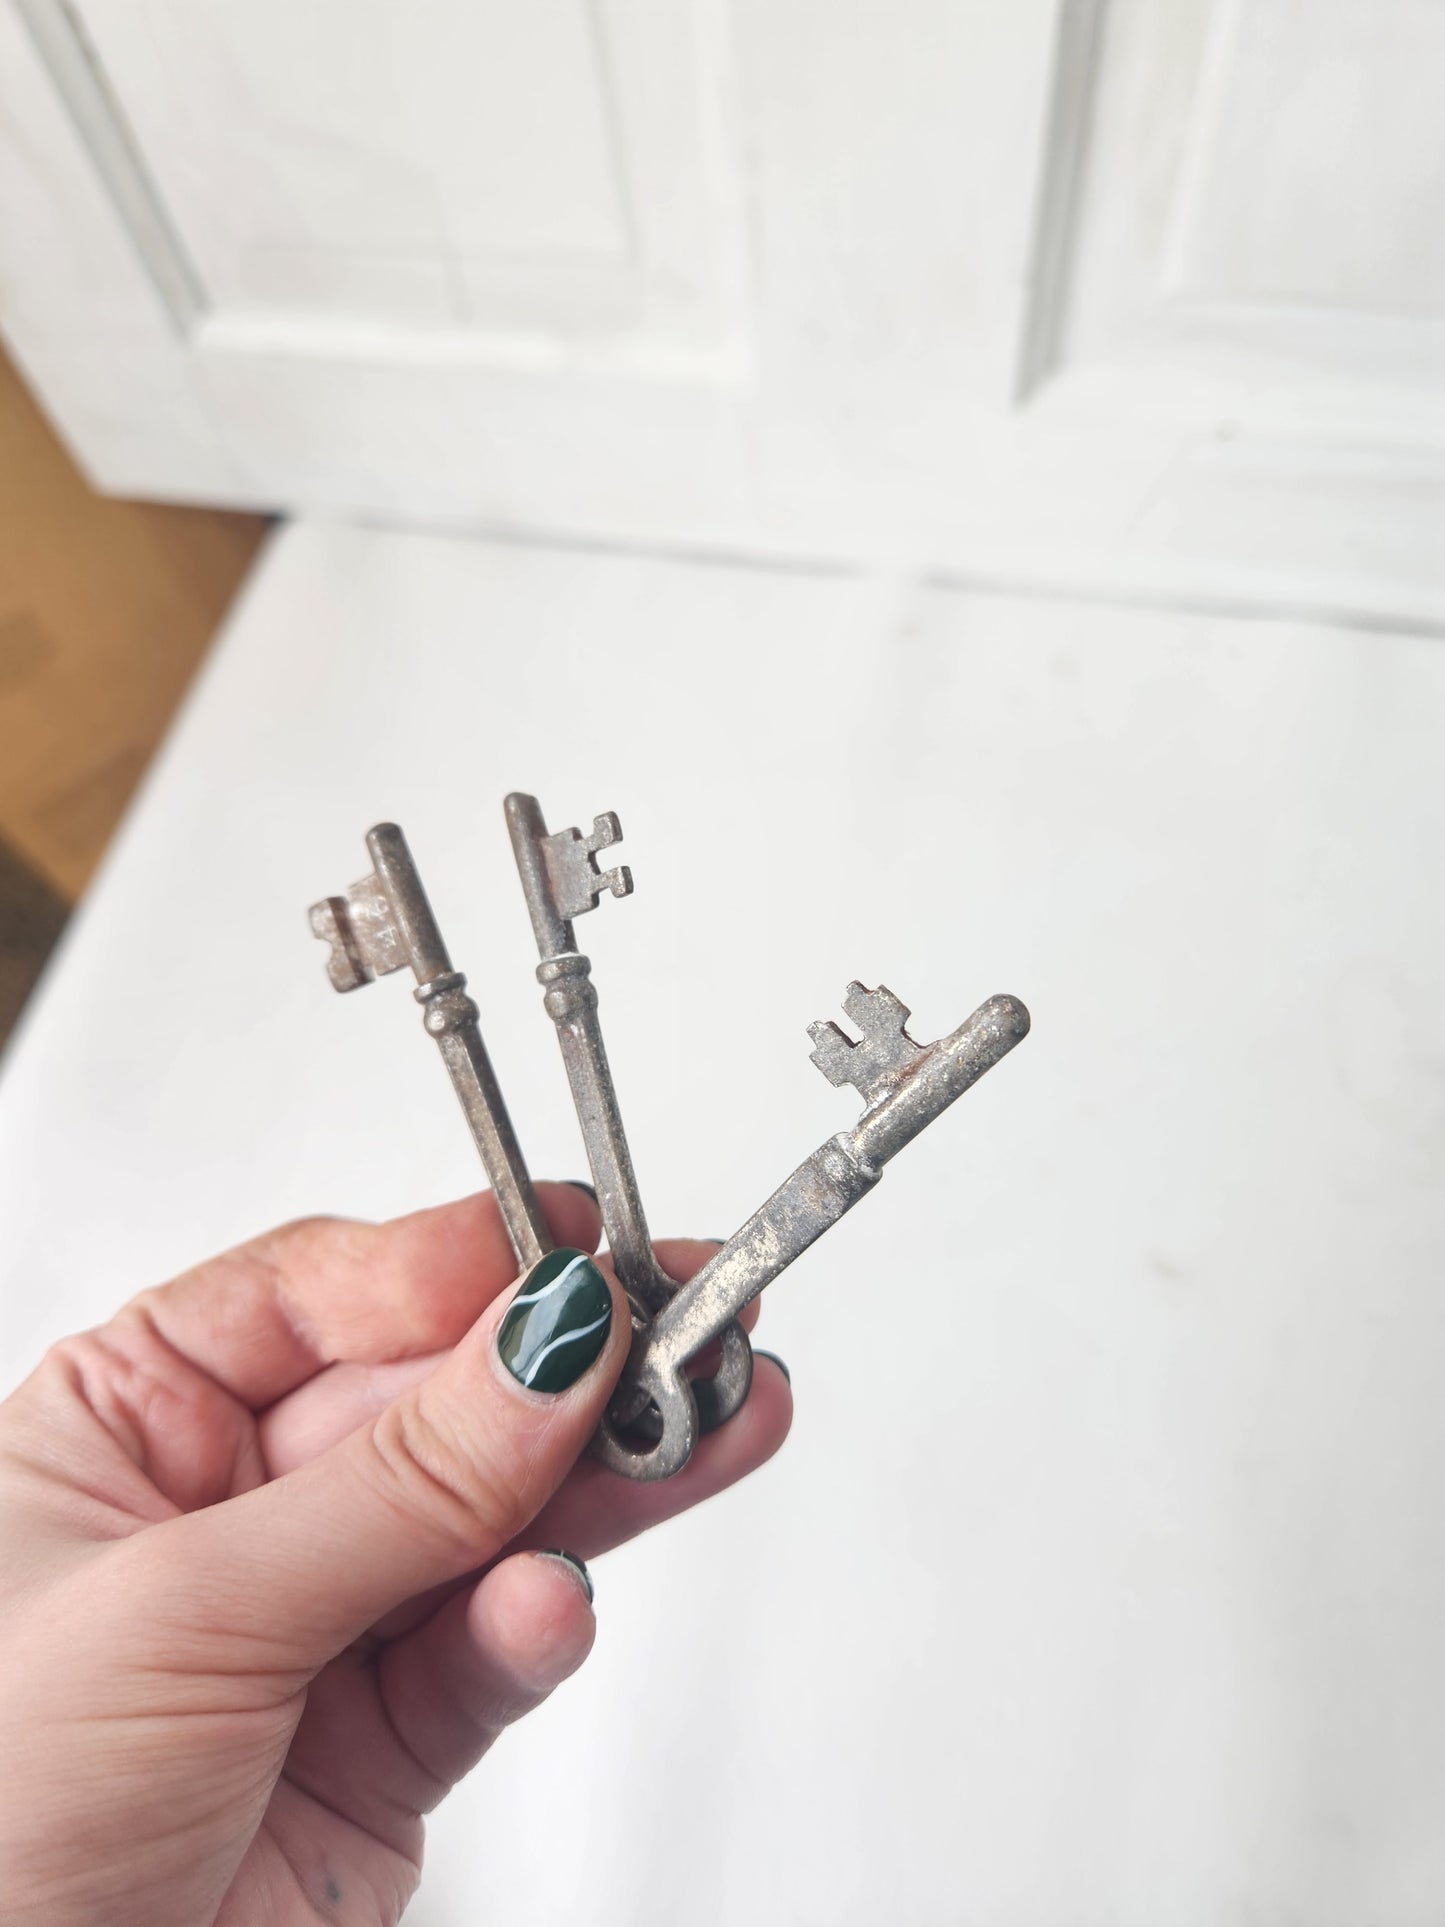 Three Antique Door Skeleton Keys, Vintage Silver Door Keys 102604